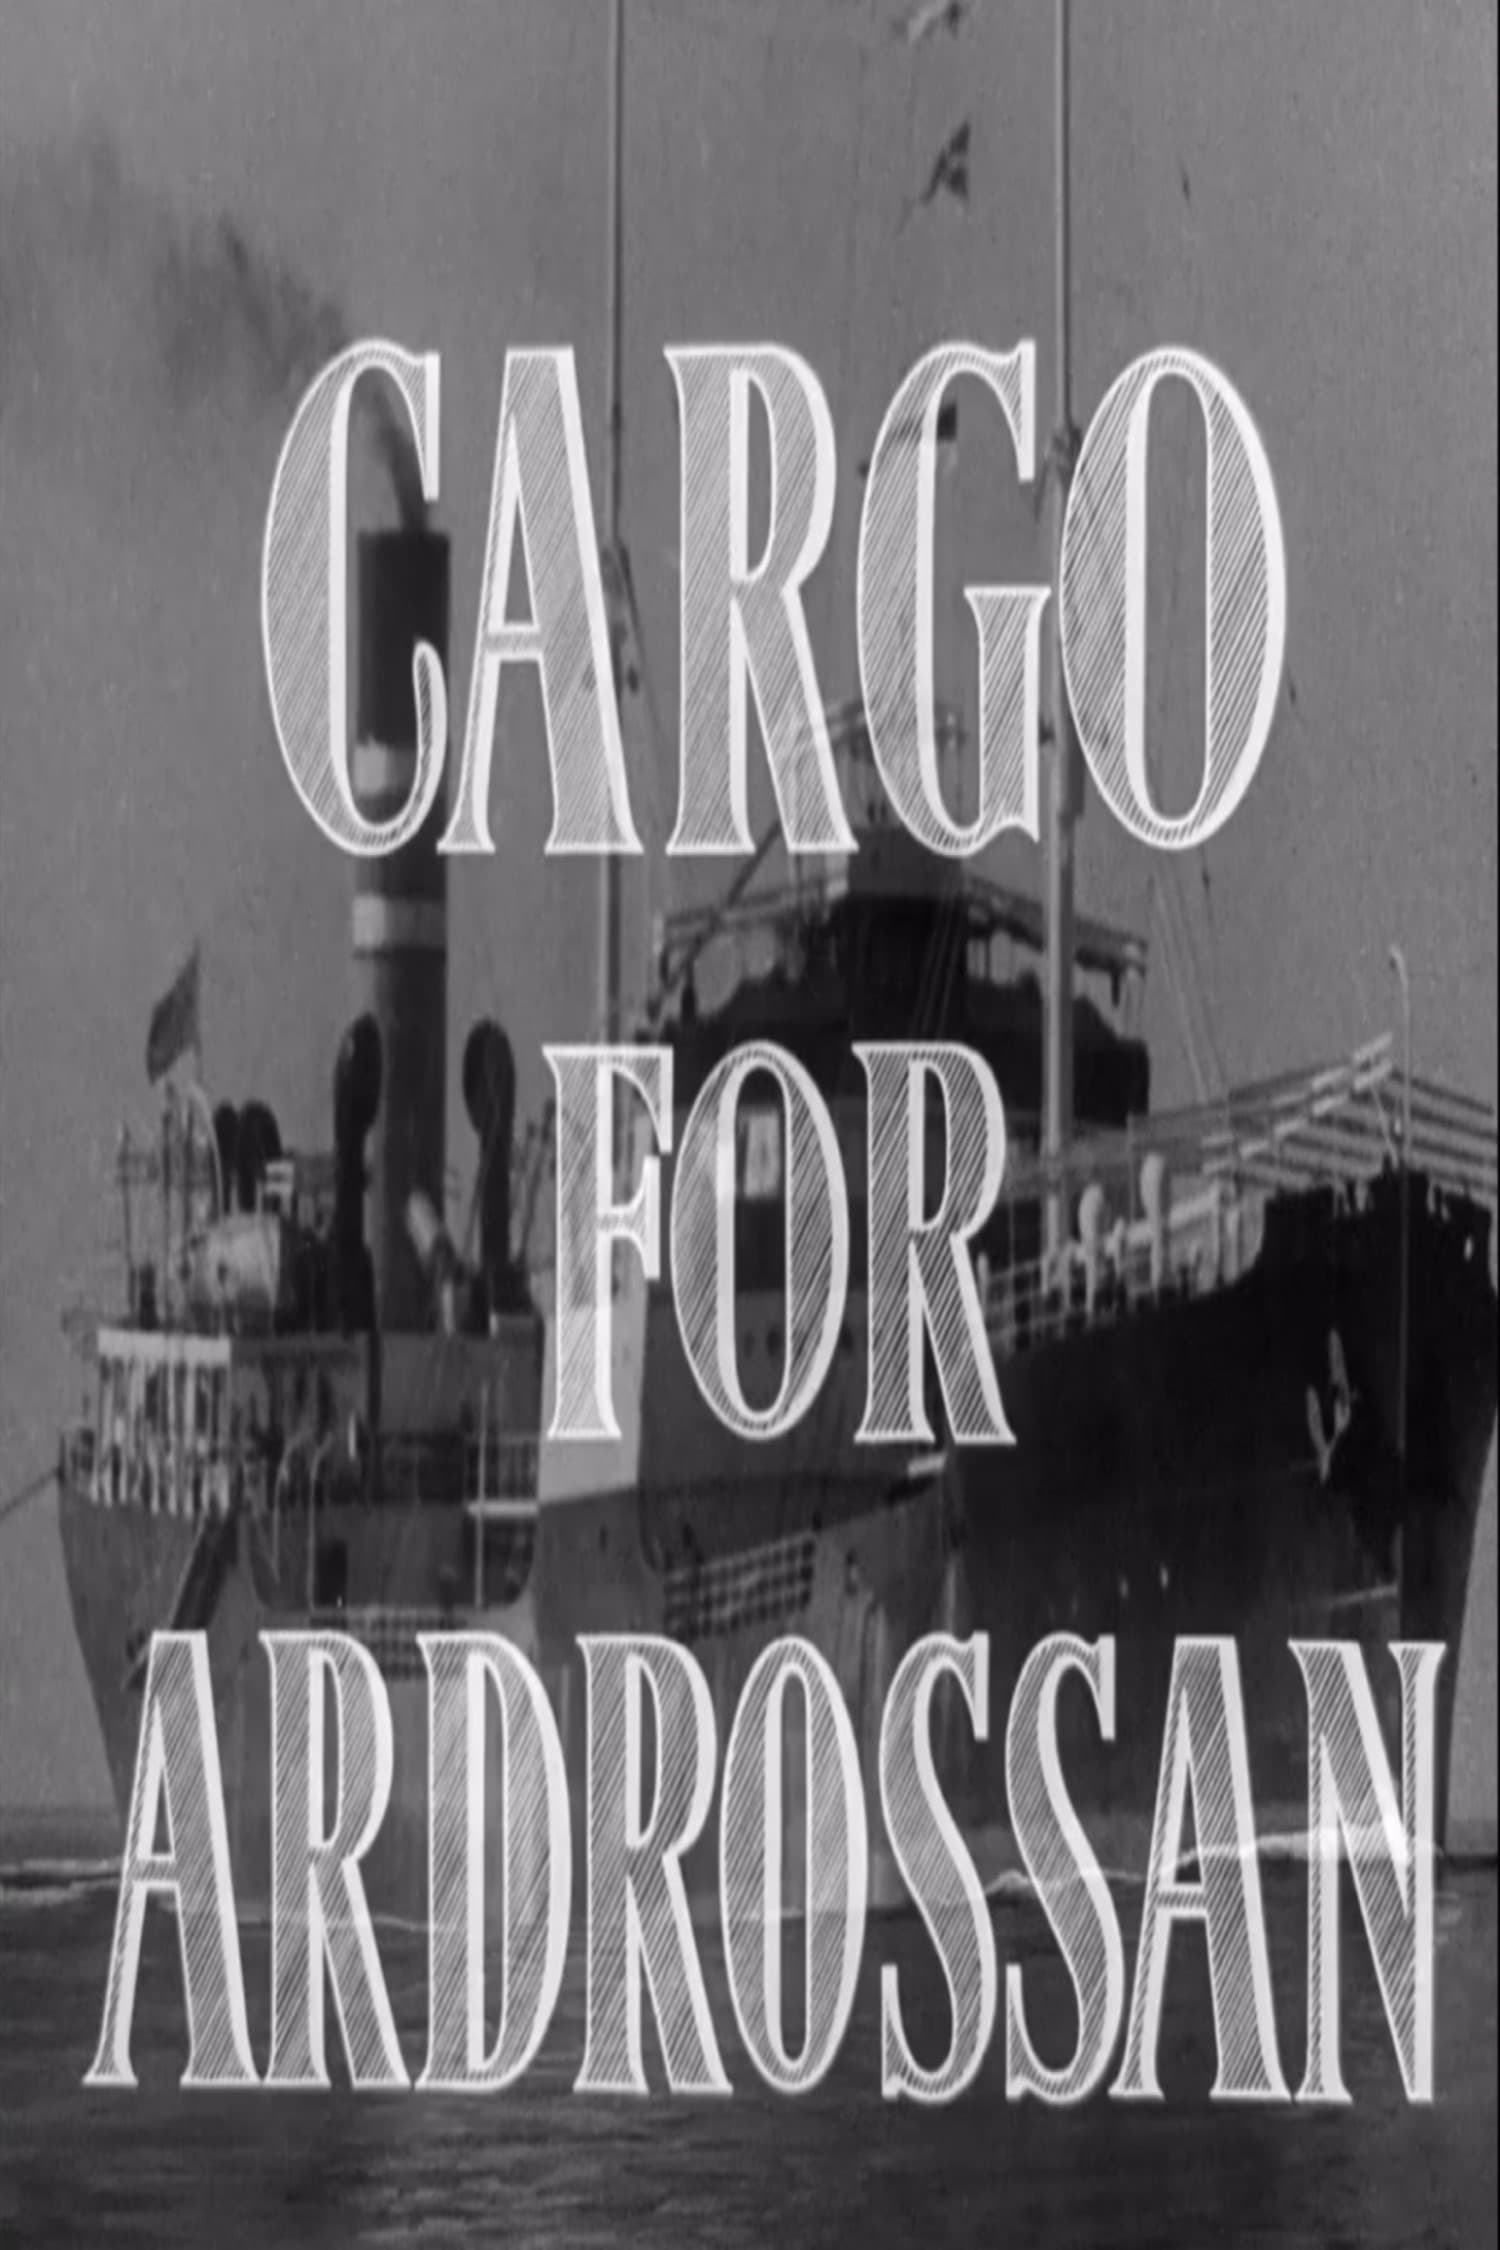 Cargo for Ardrossan